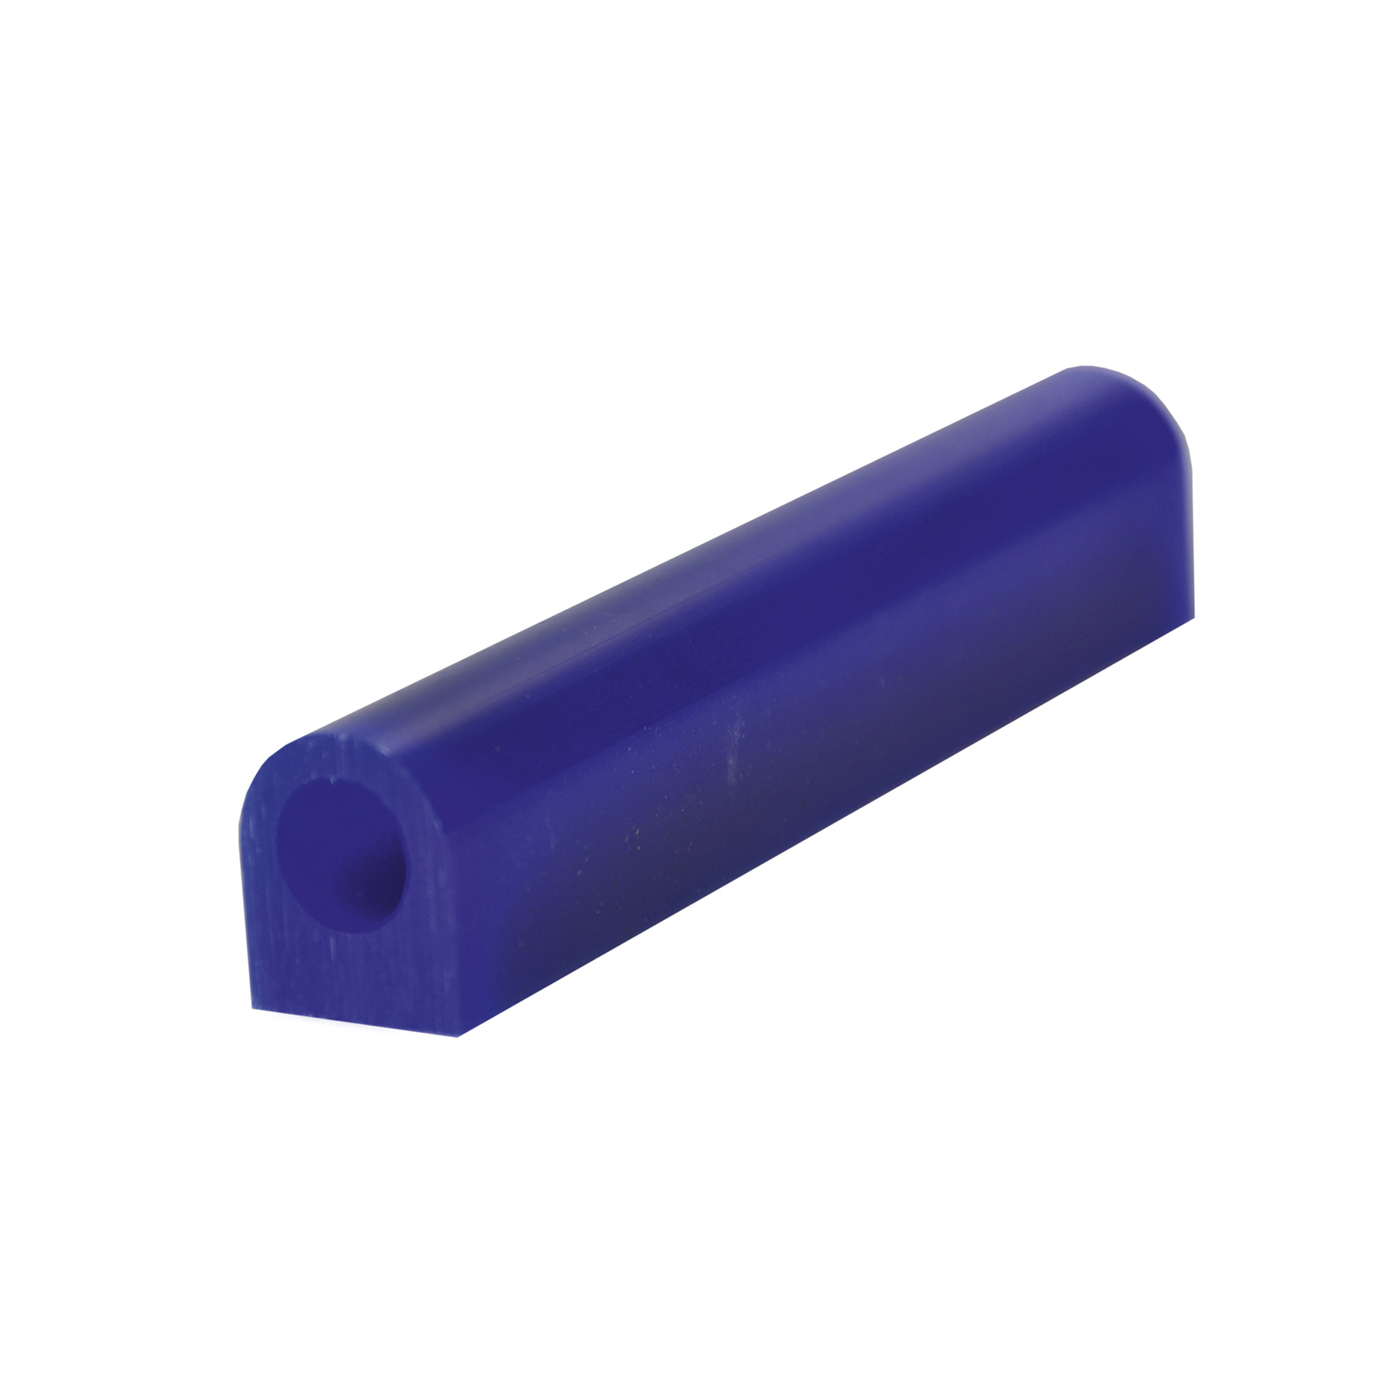 Filing/Milling Wax Signet Ring Profile, Hard, Blue - 1 piece